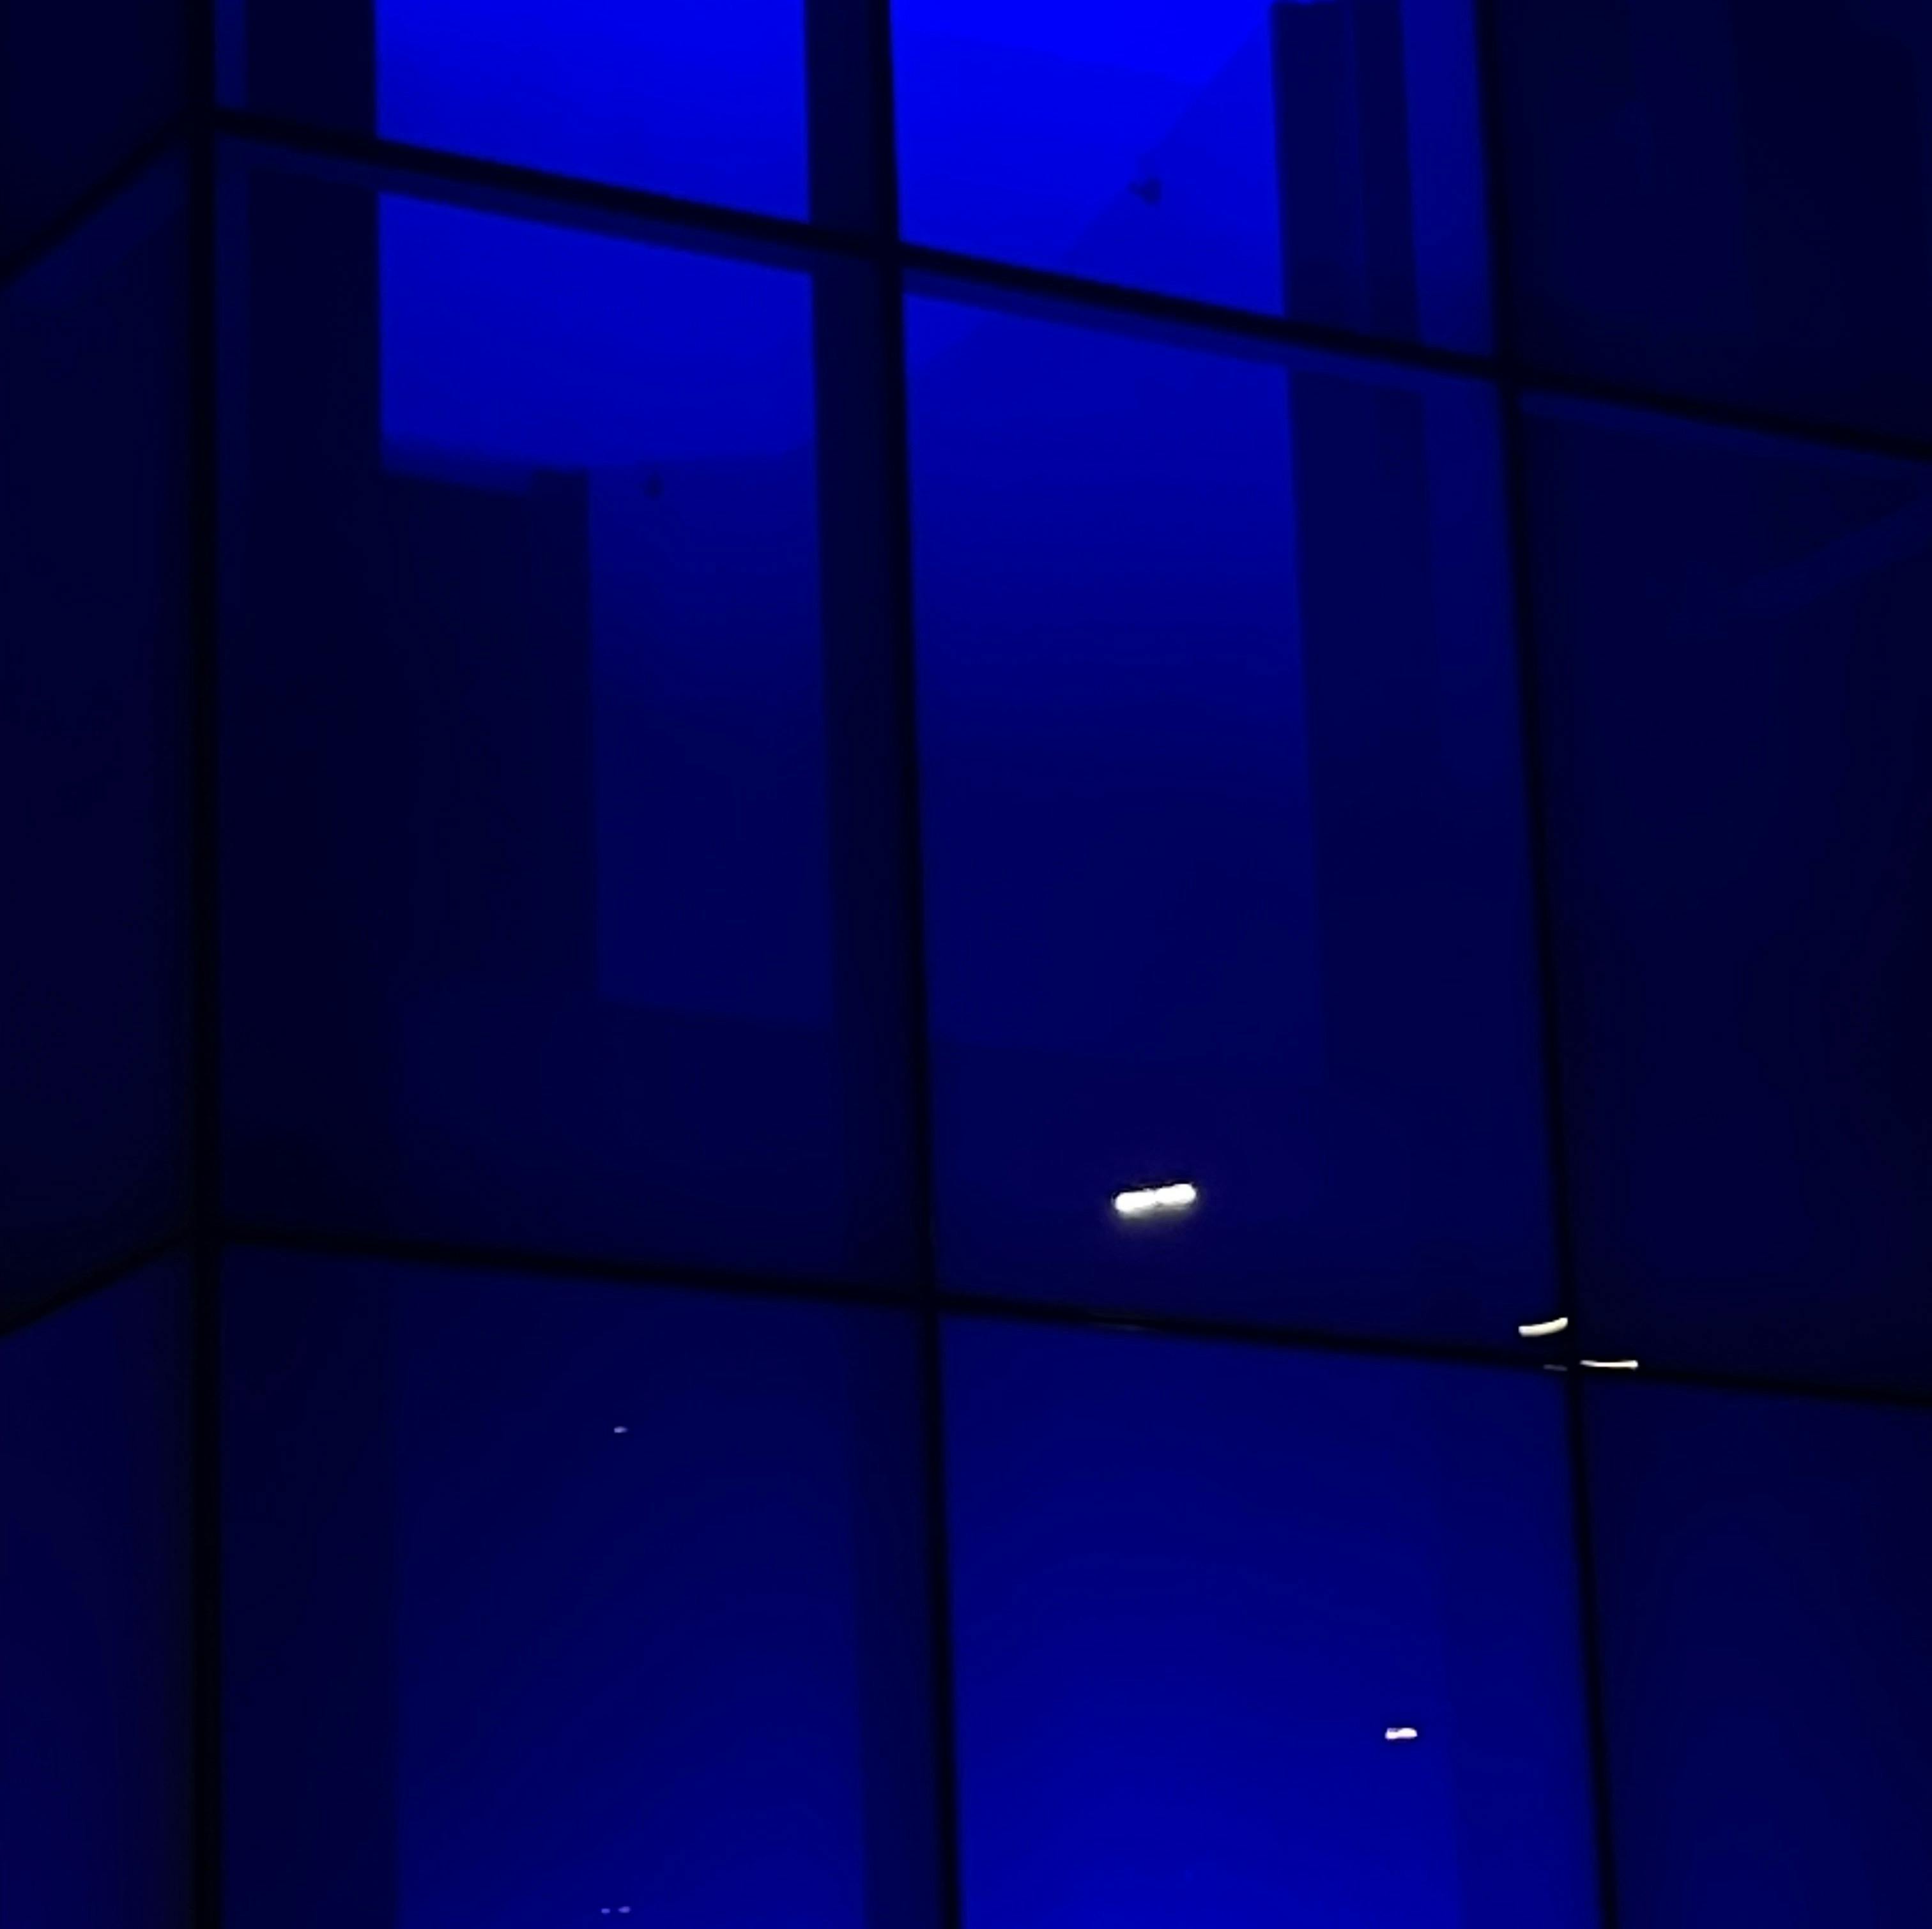 Window with a grid-like pattern illuminated by dark blue light